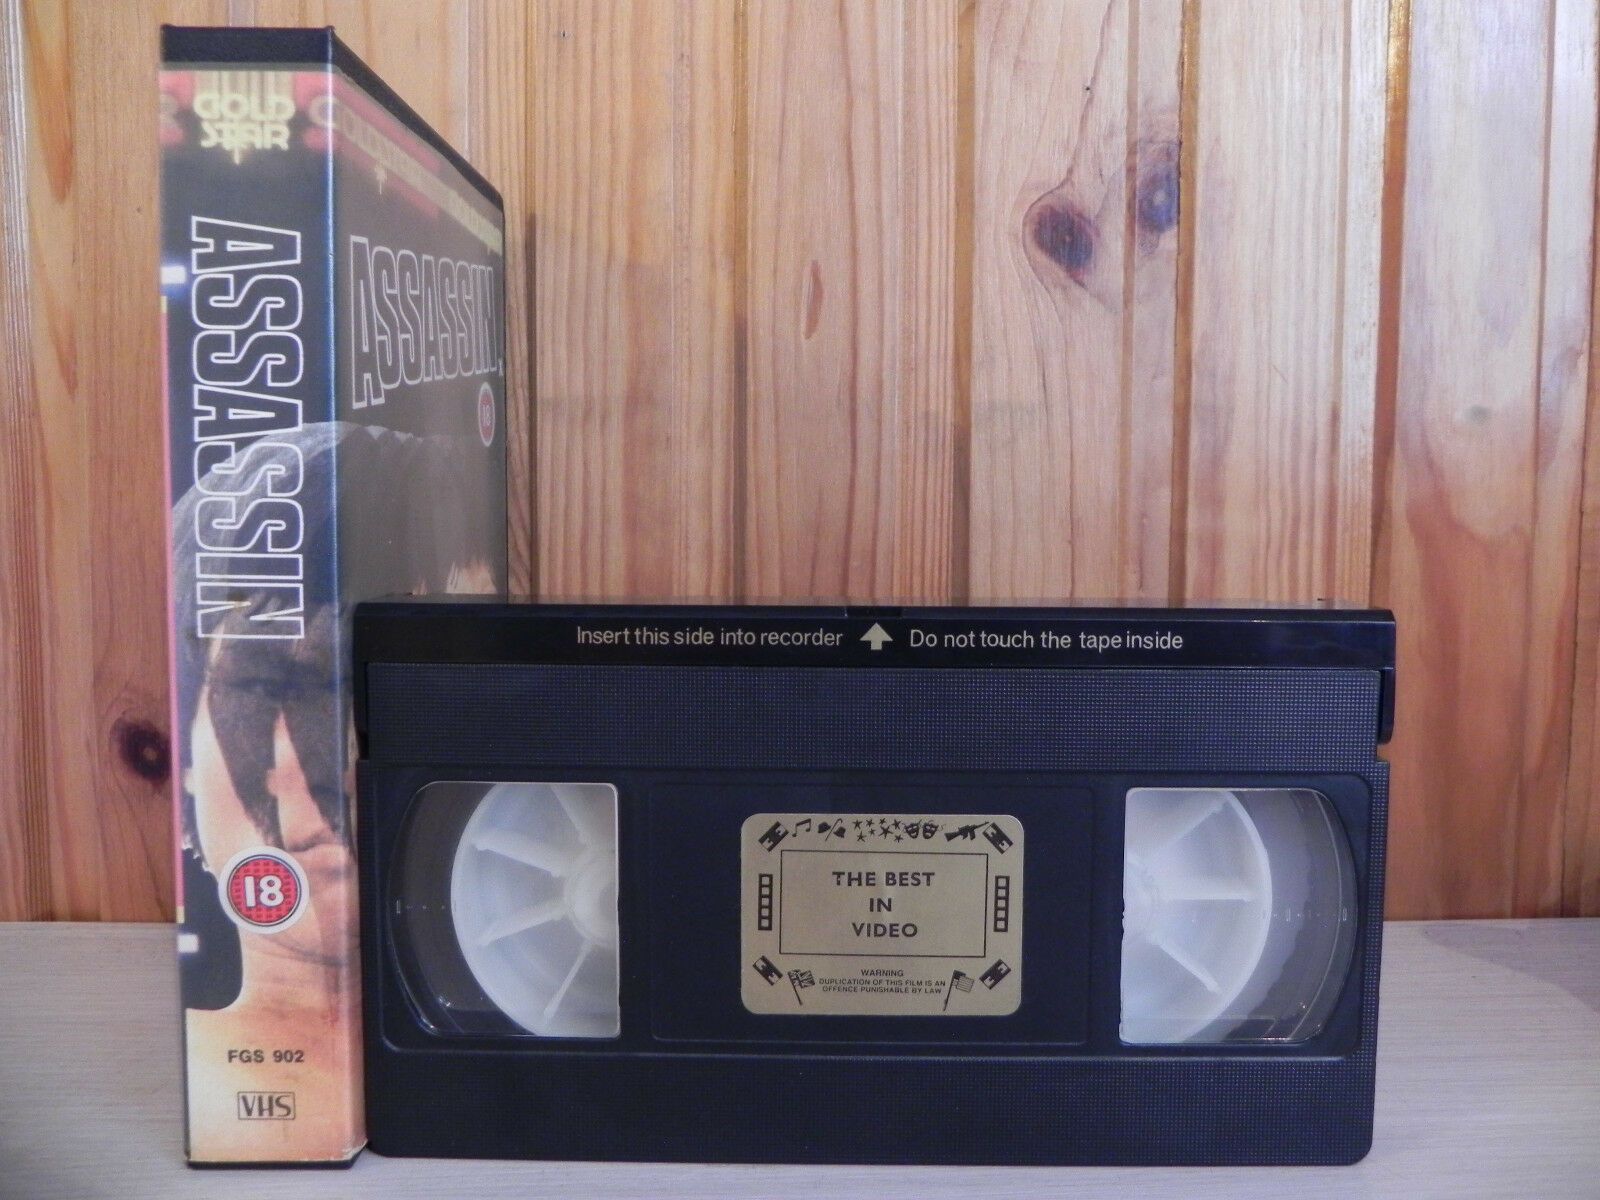 Assassin - Pre-Cert - Martial Arts - Action - Gold Star - Derann - FGS902 - VHS-